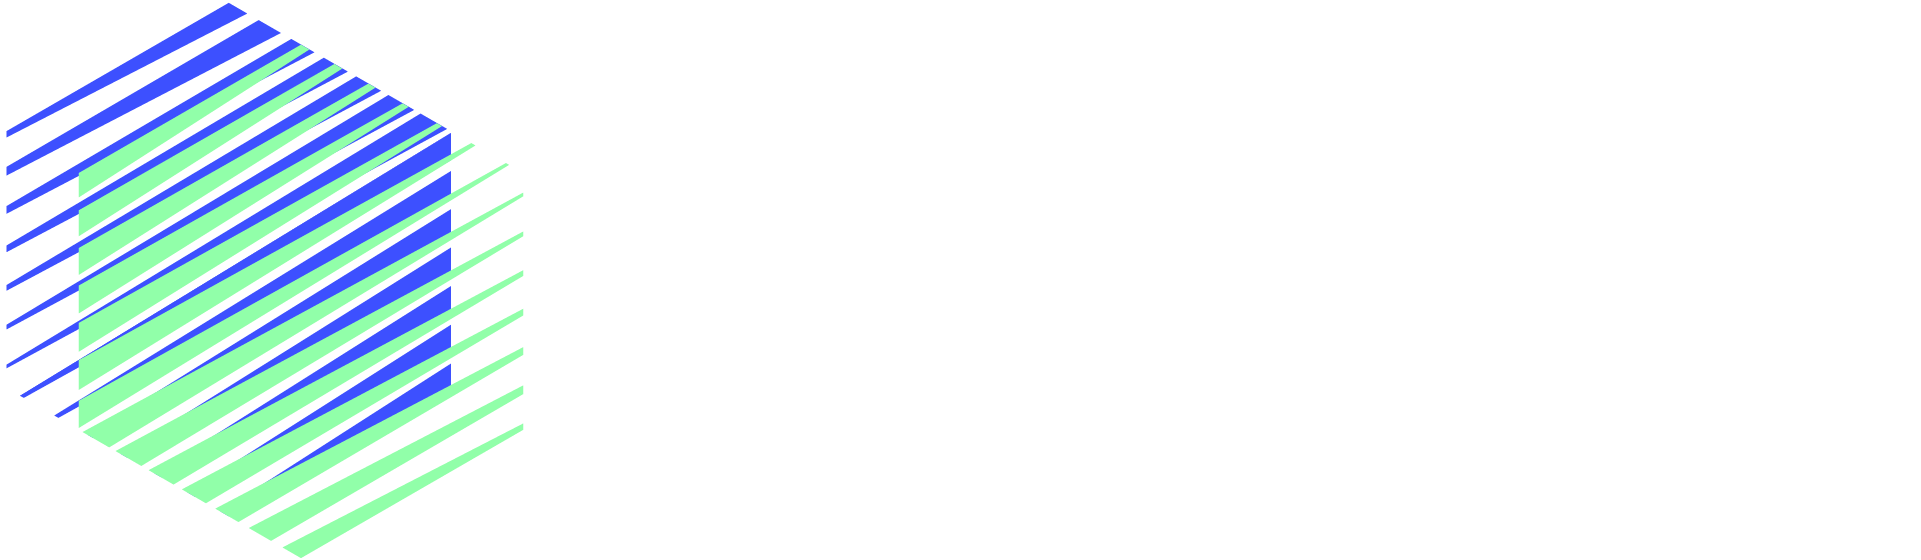 SkyNano logo